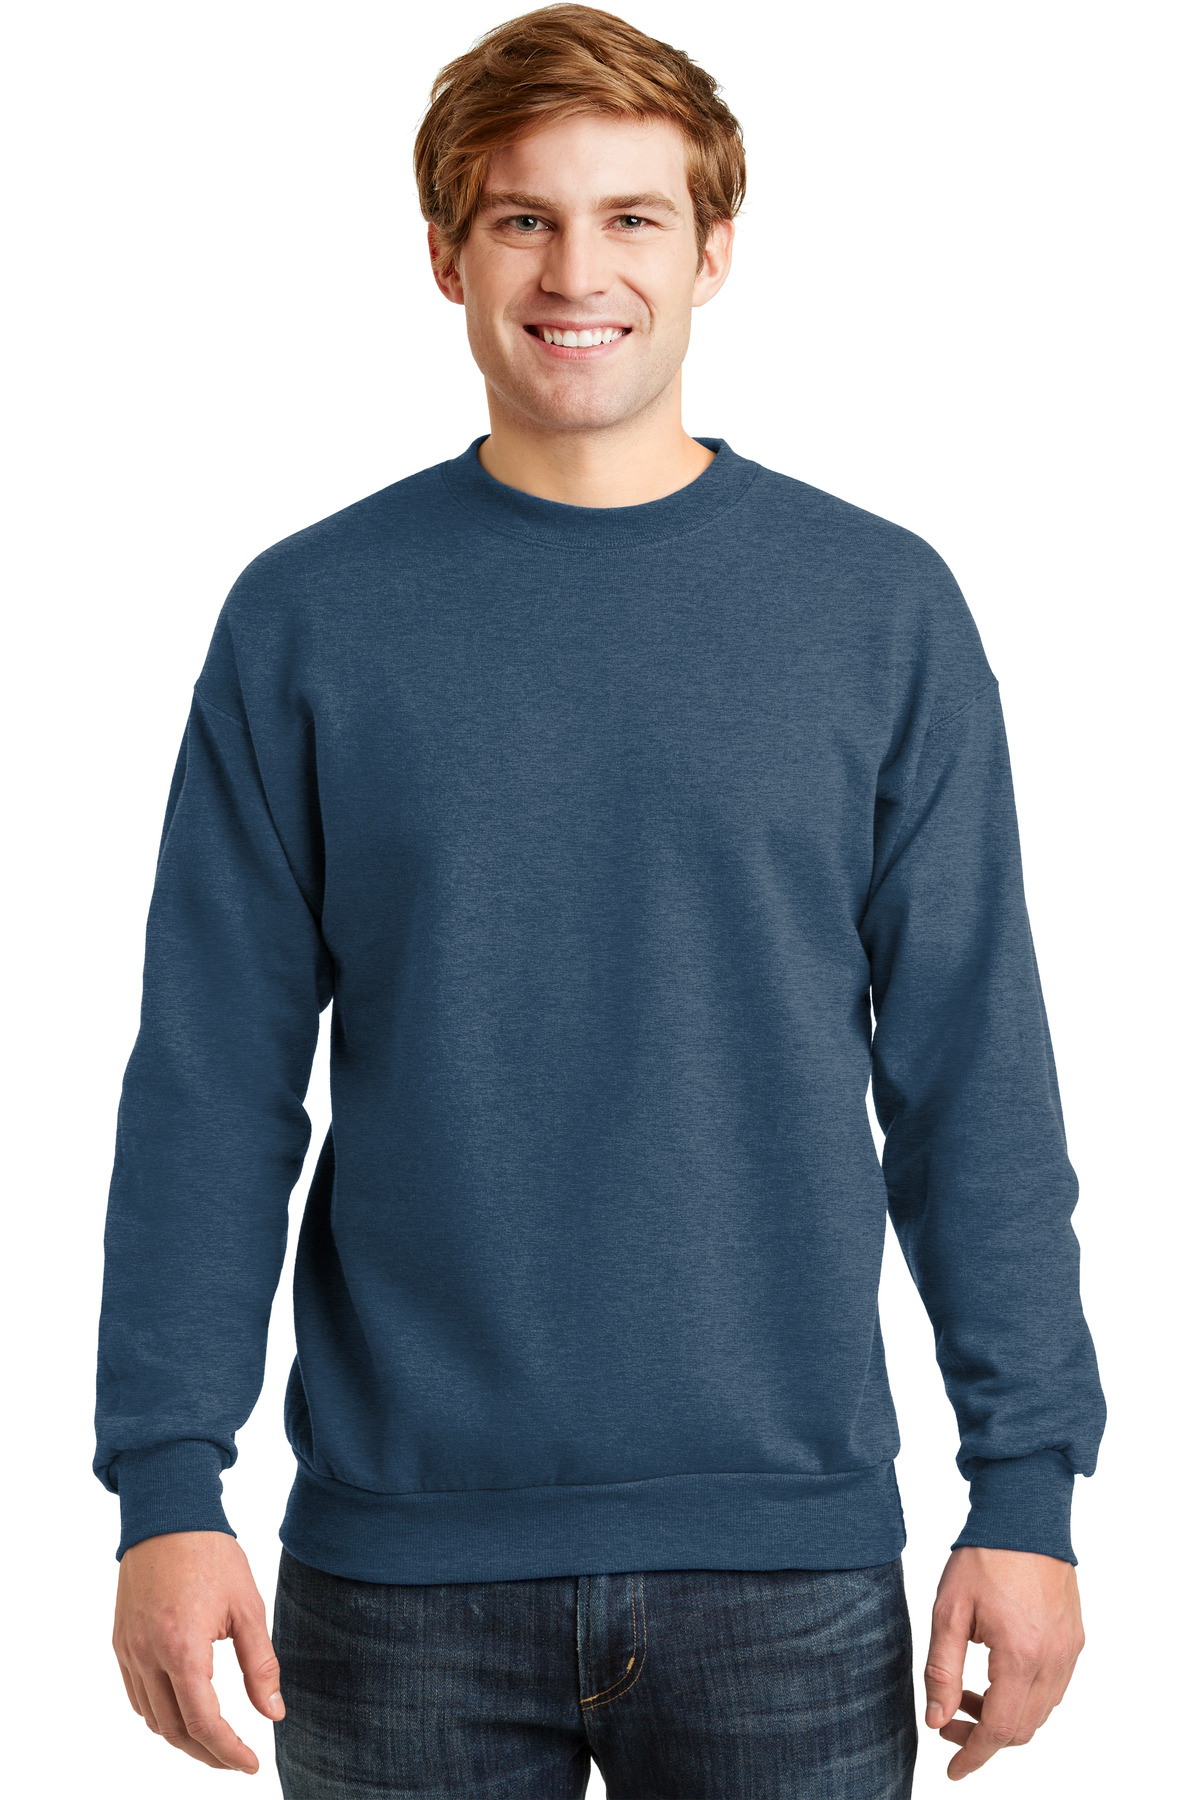 Hanes Men's - EcoSmart Crewneck Sweatshirt. P160 FREE SHIPPING! | eBay